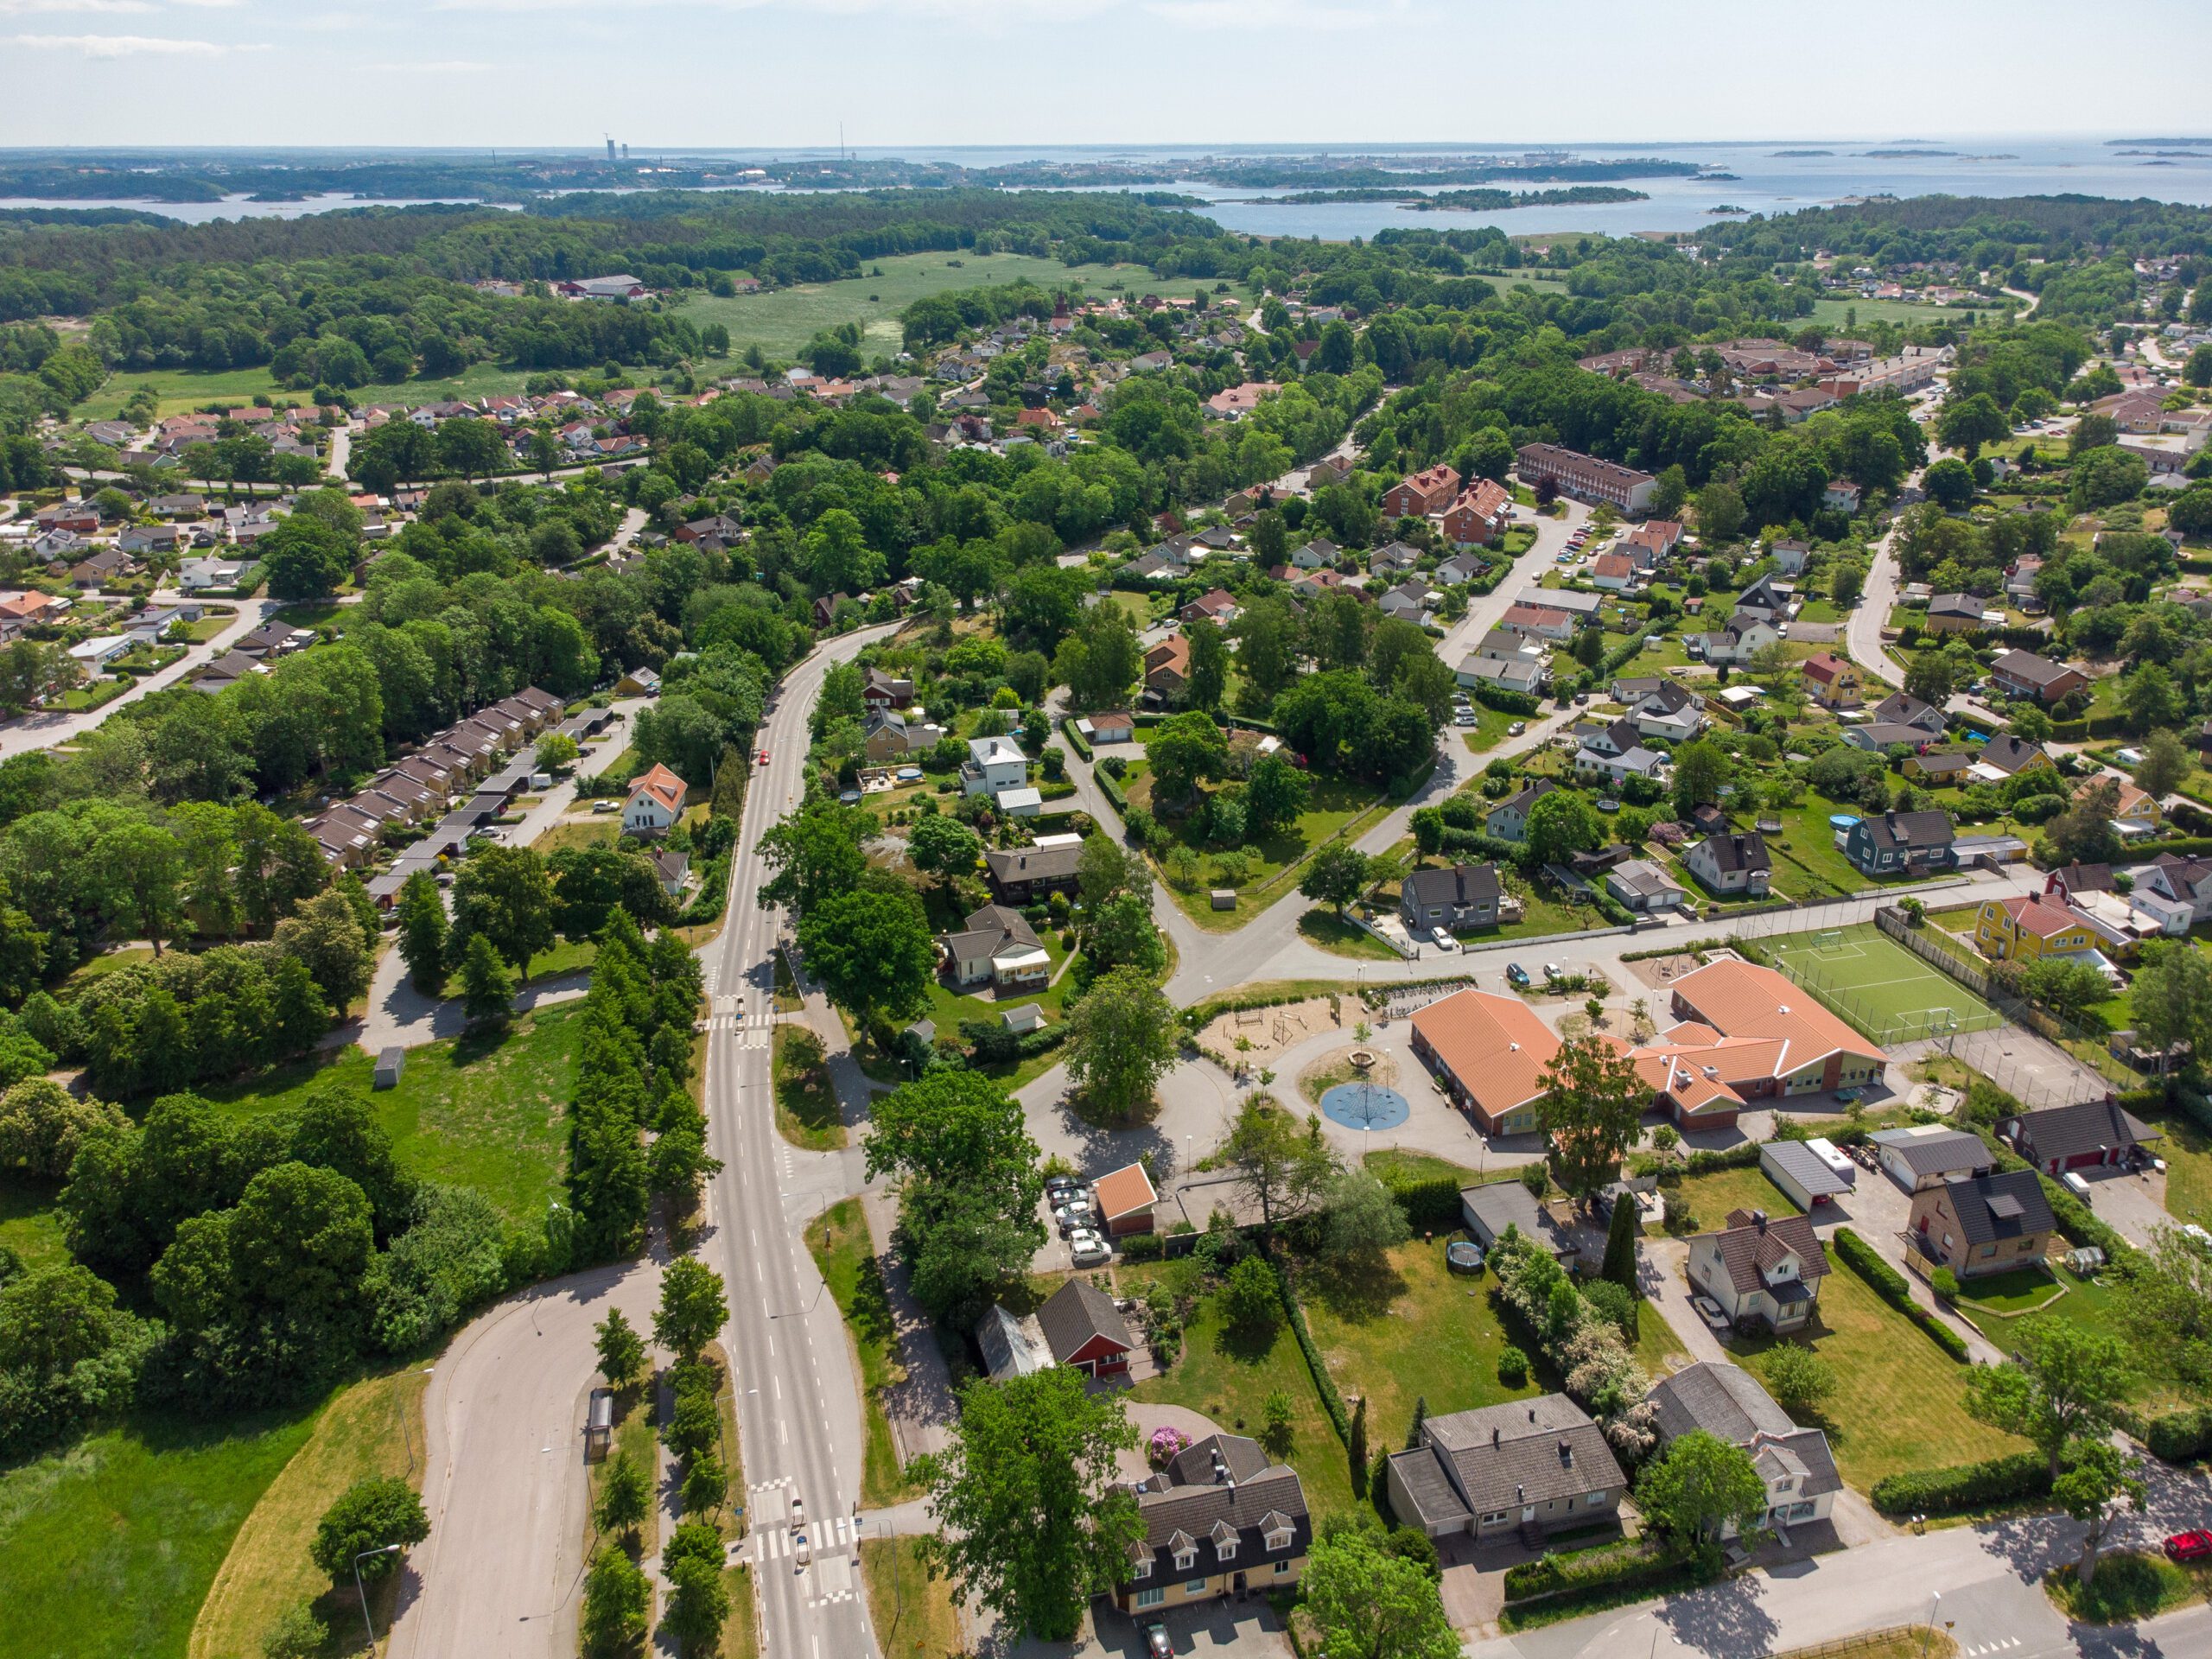 Aerial photo of Nättraby in Karlskrona, Sweden